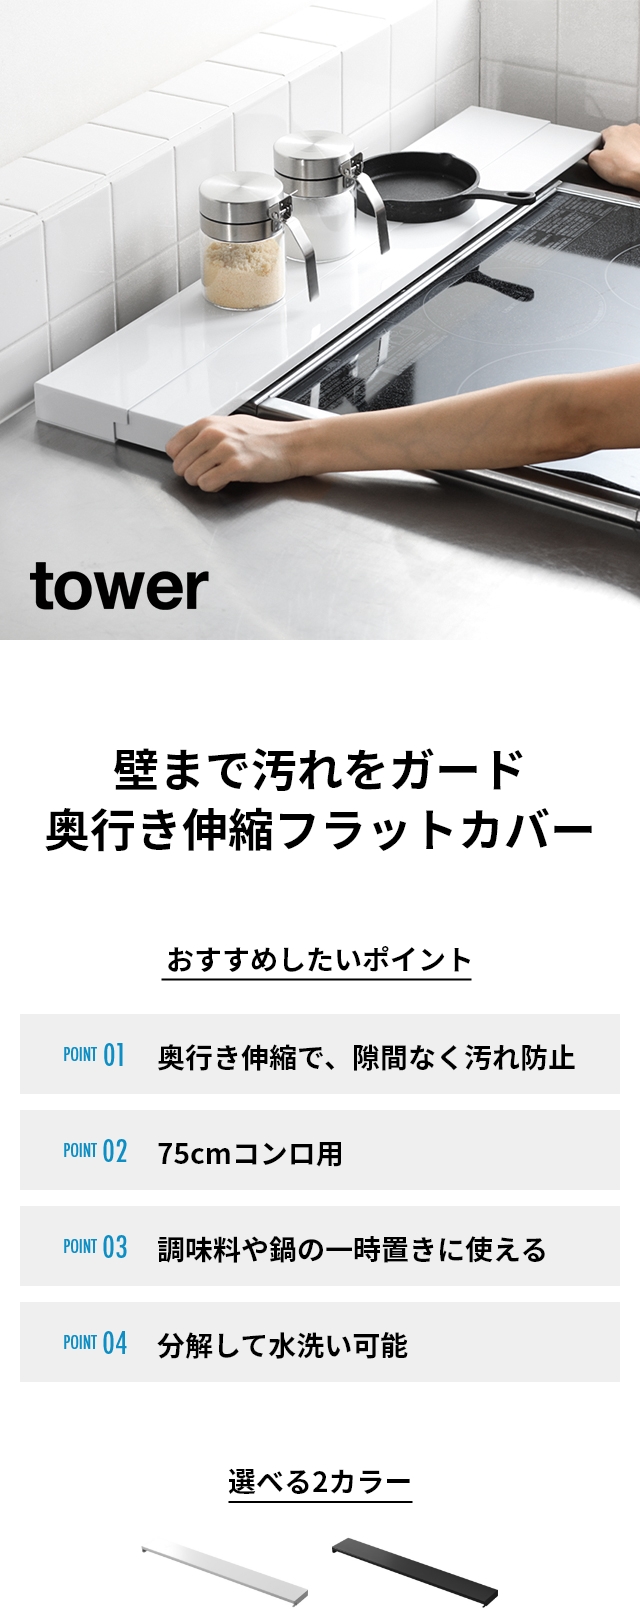 tower (タワー) 奥行伸縮排気口カバー 75cmコンロ用